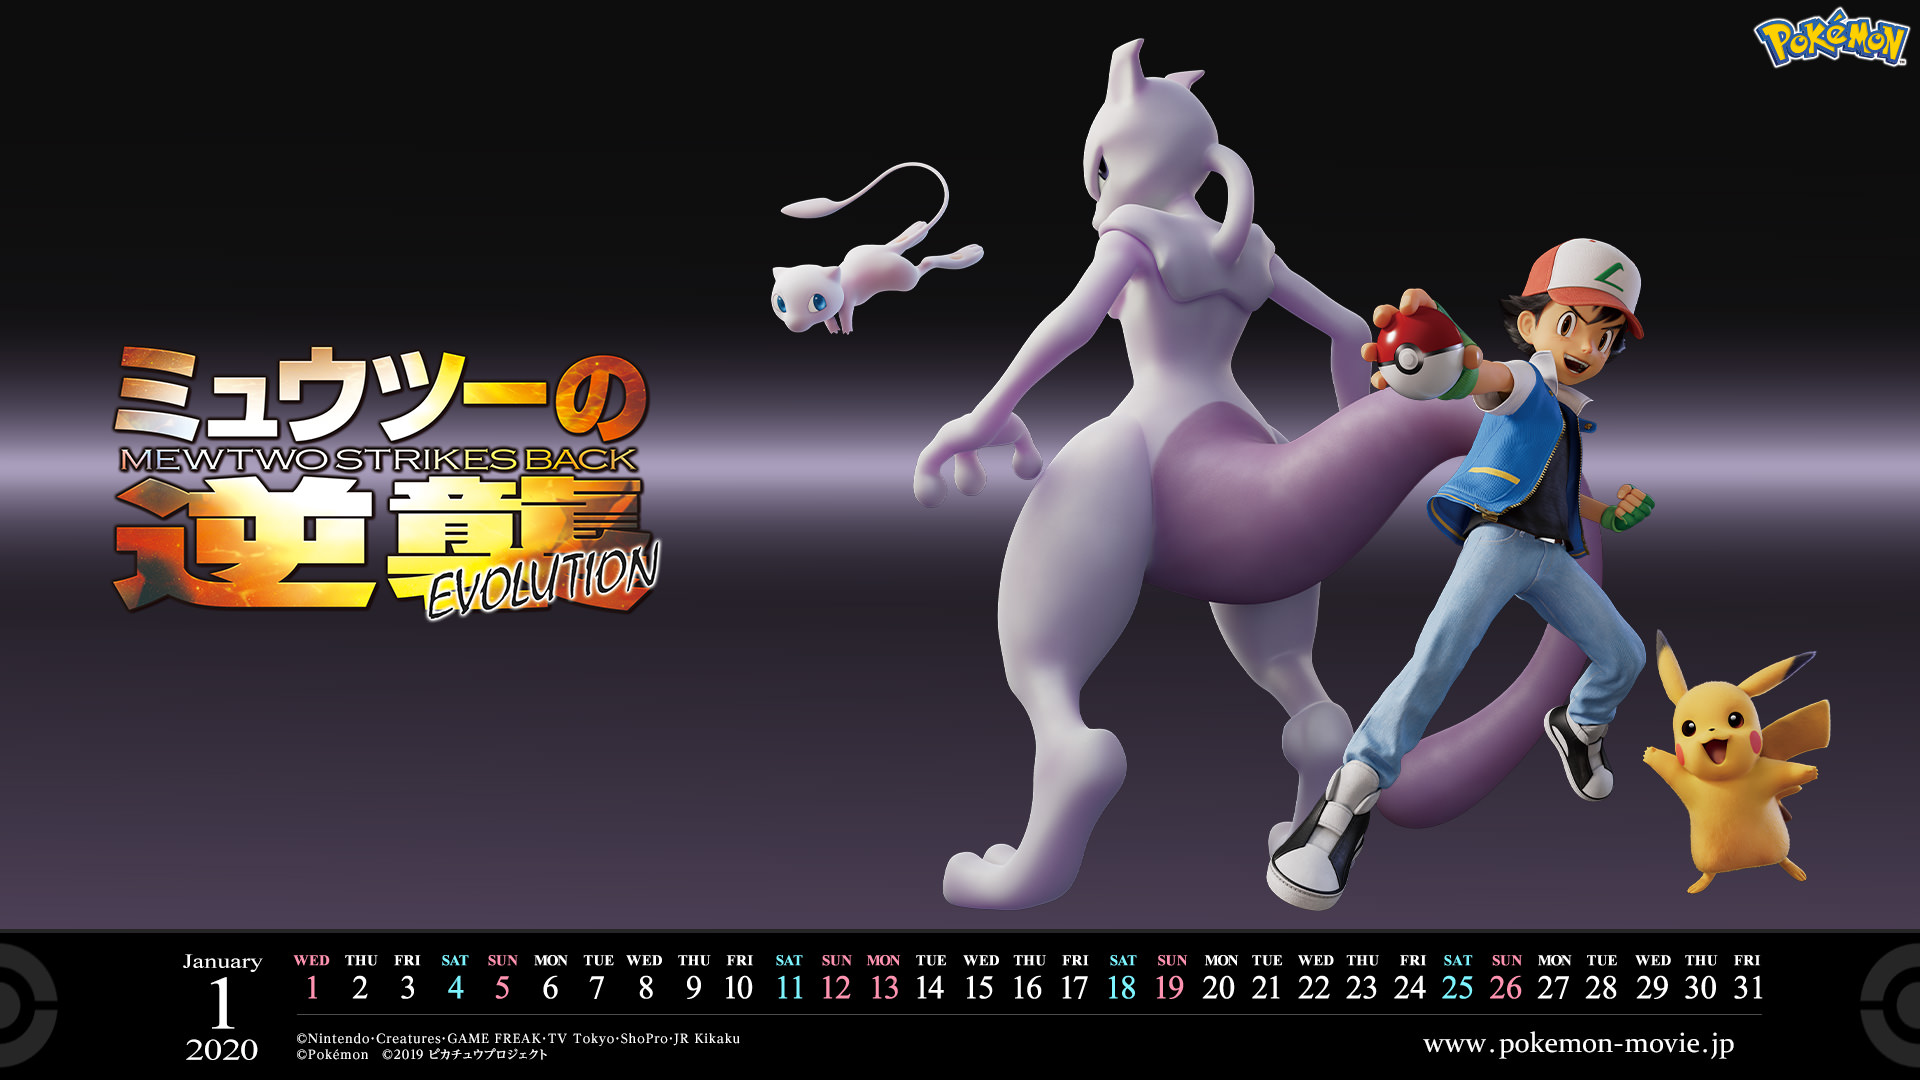 New Pokemon The Movie Mewtwo Strikes Back Evolution Wallpaper Released The Gonintendo Archives Gonintendo